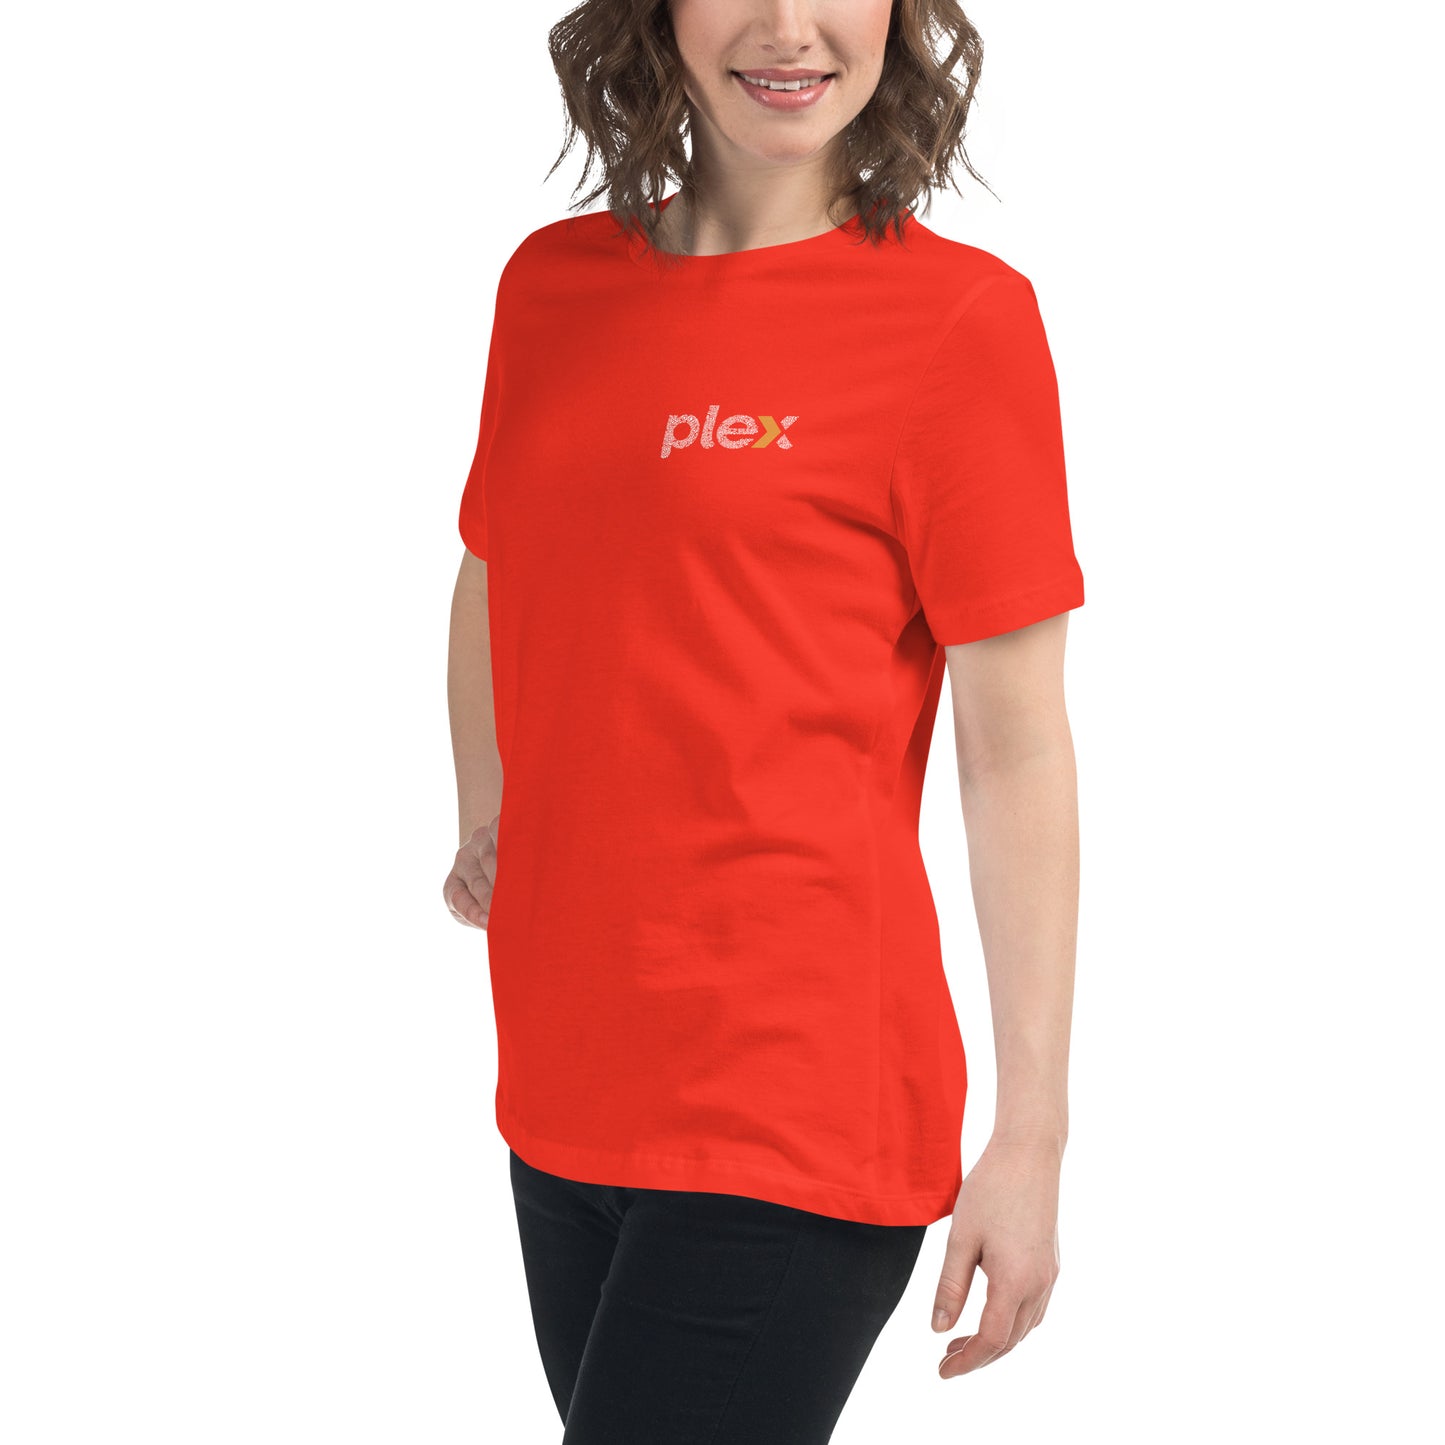 1 Billion Women's T-Shirt (Pocket Print)